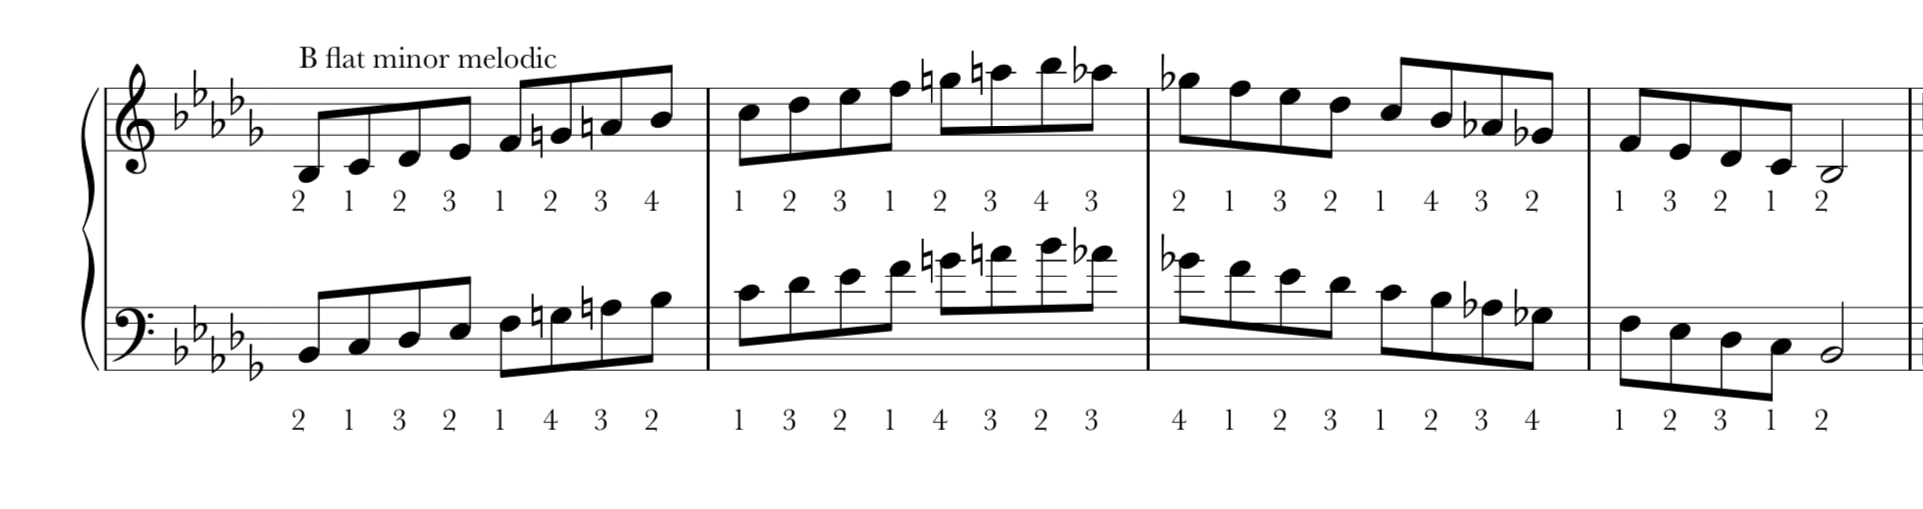 B flat melodic minor scale